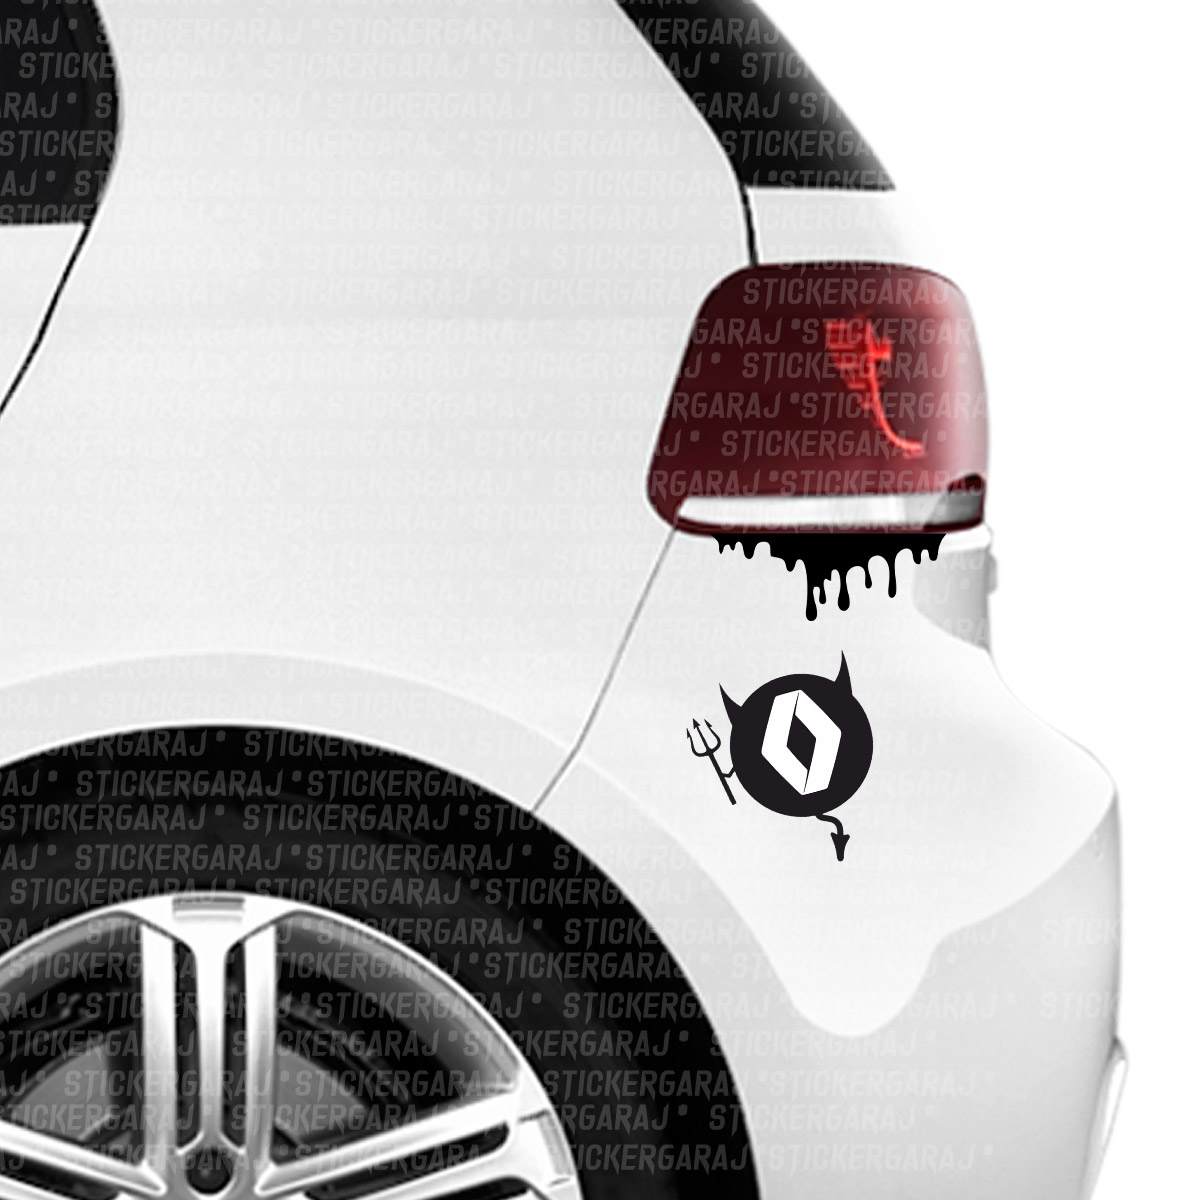 renault devil sticker - Renault devil şeytan sticker